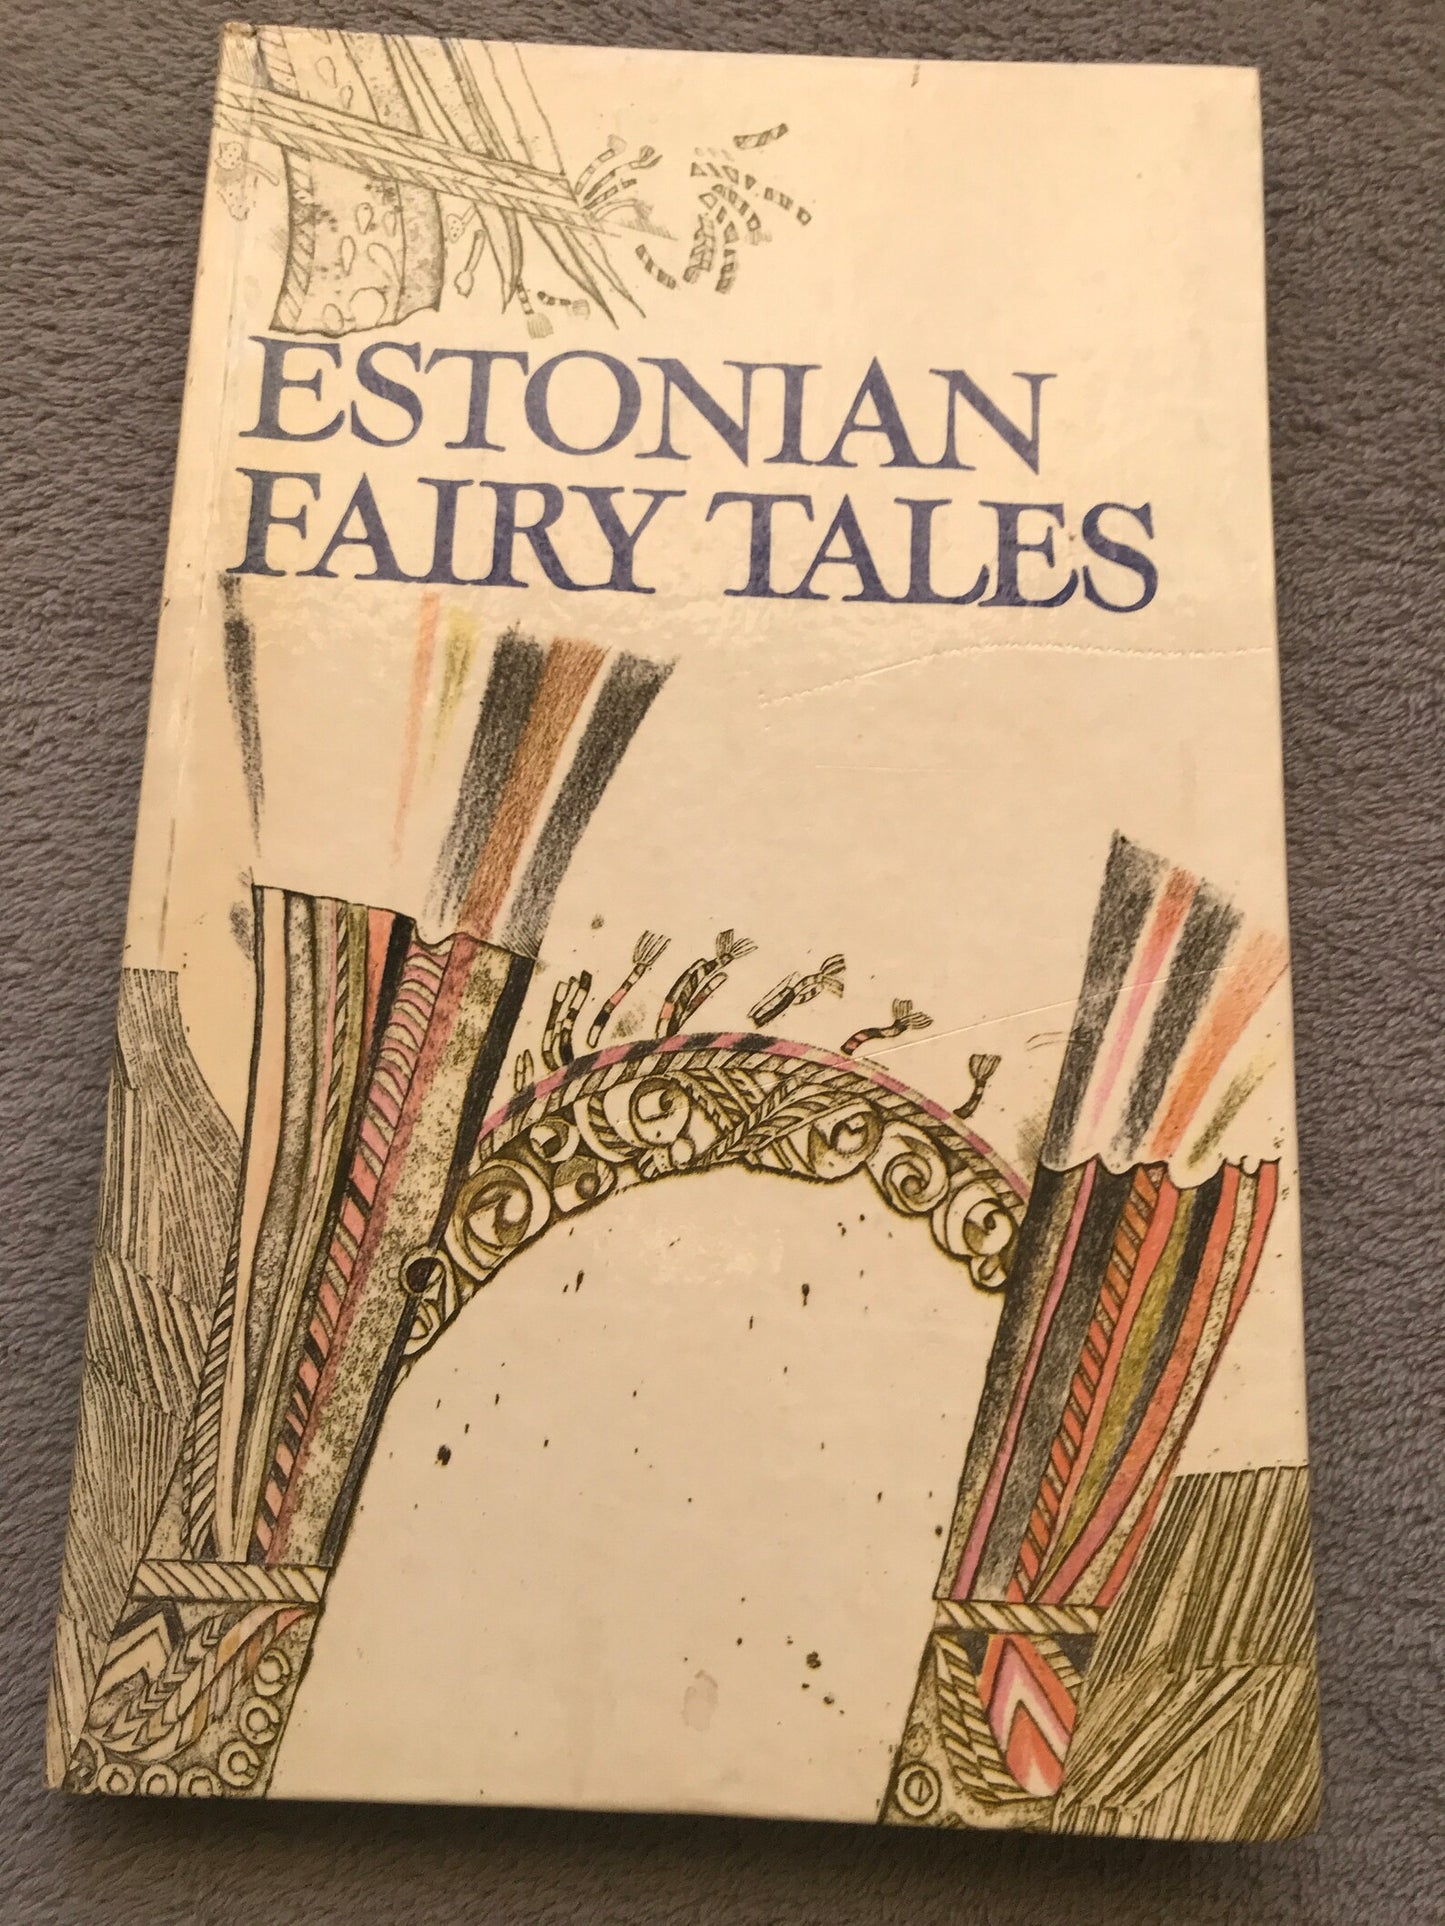 Vintage Children's Book in English - ESTONIAN FAIRY-TALES - 1981